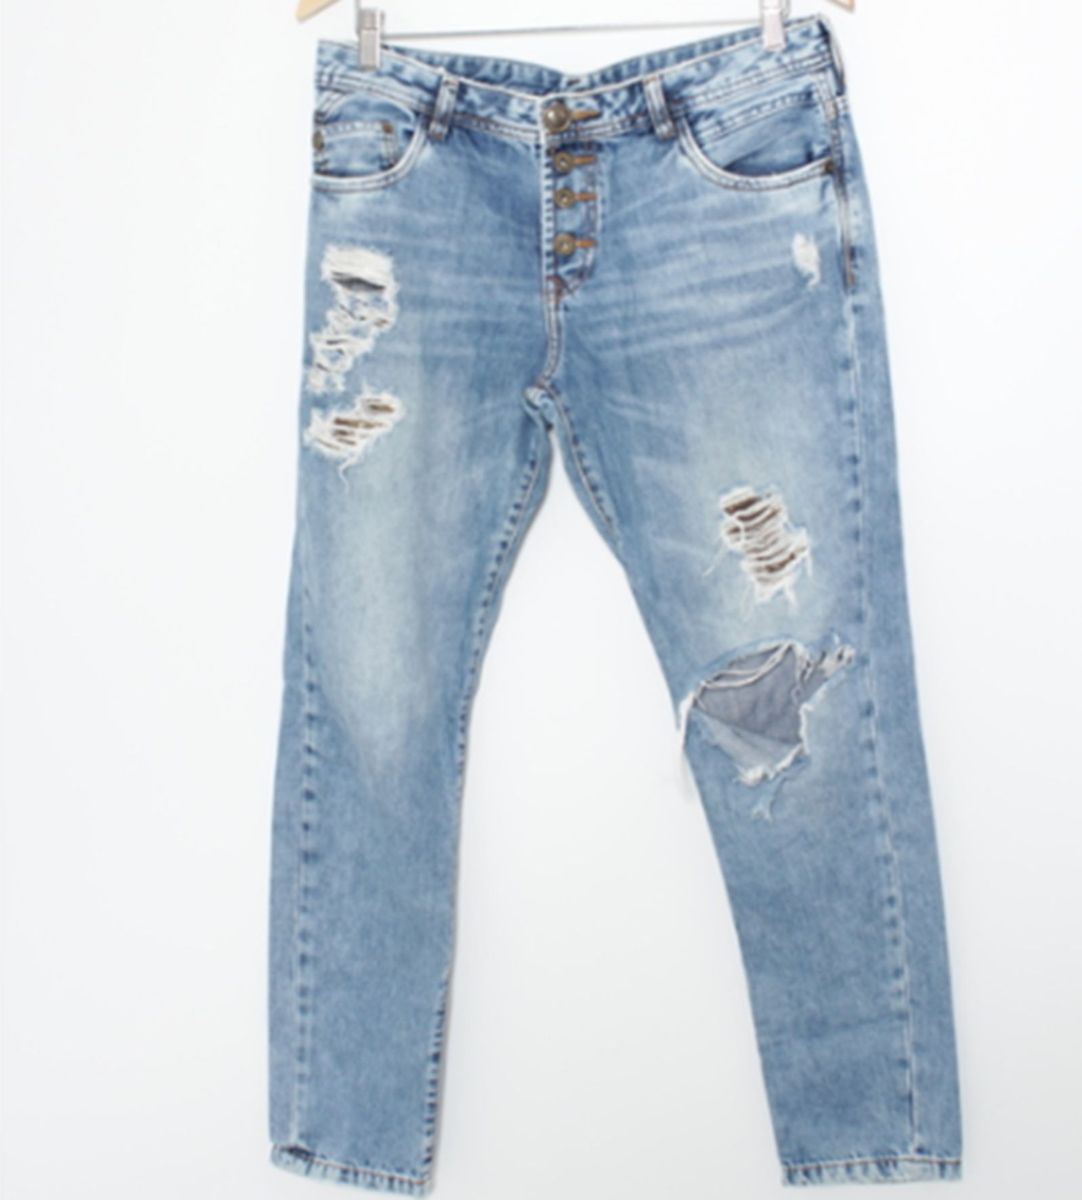 prefixo jeans lojas